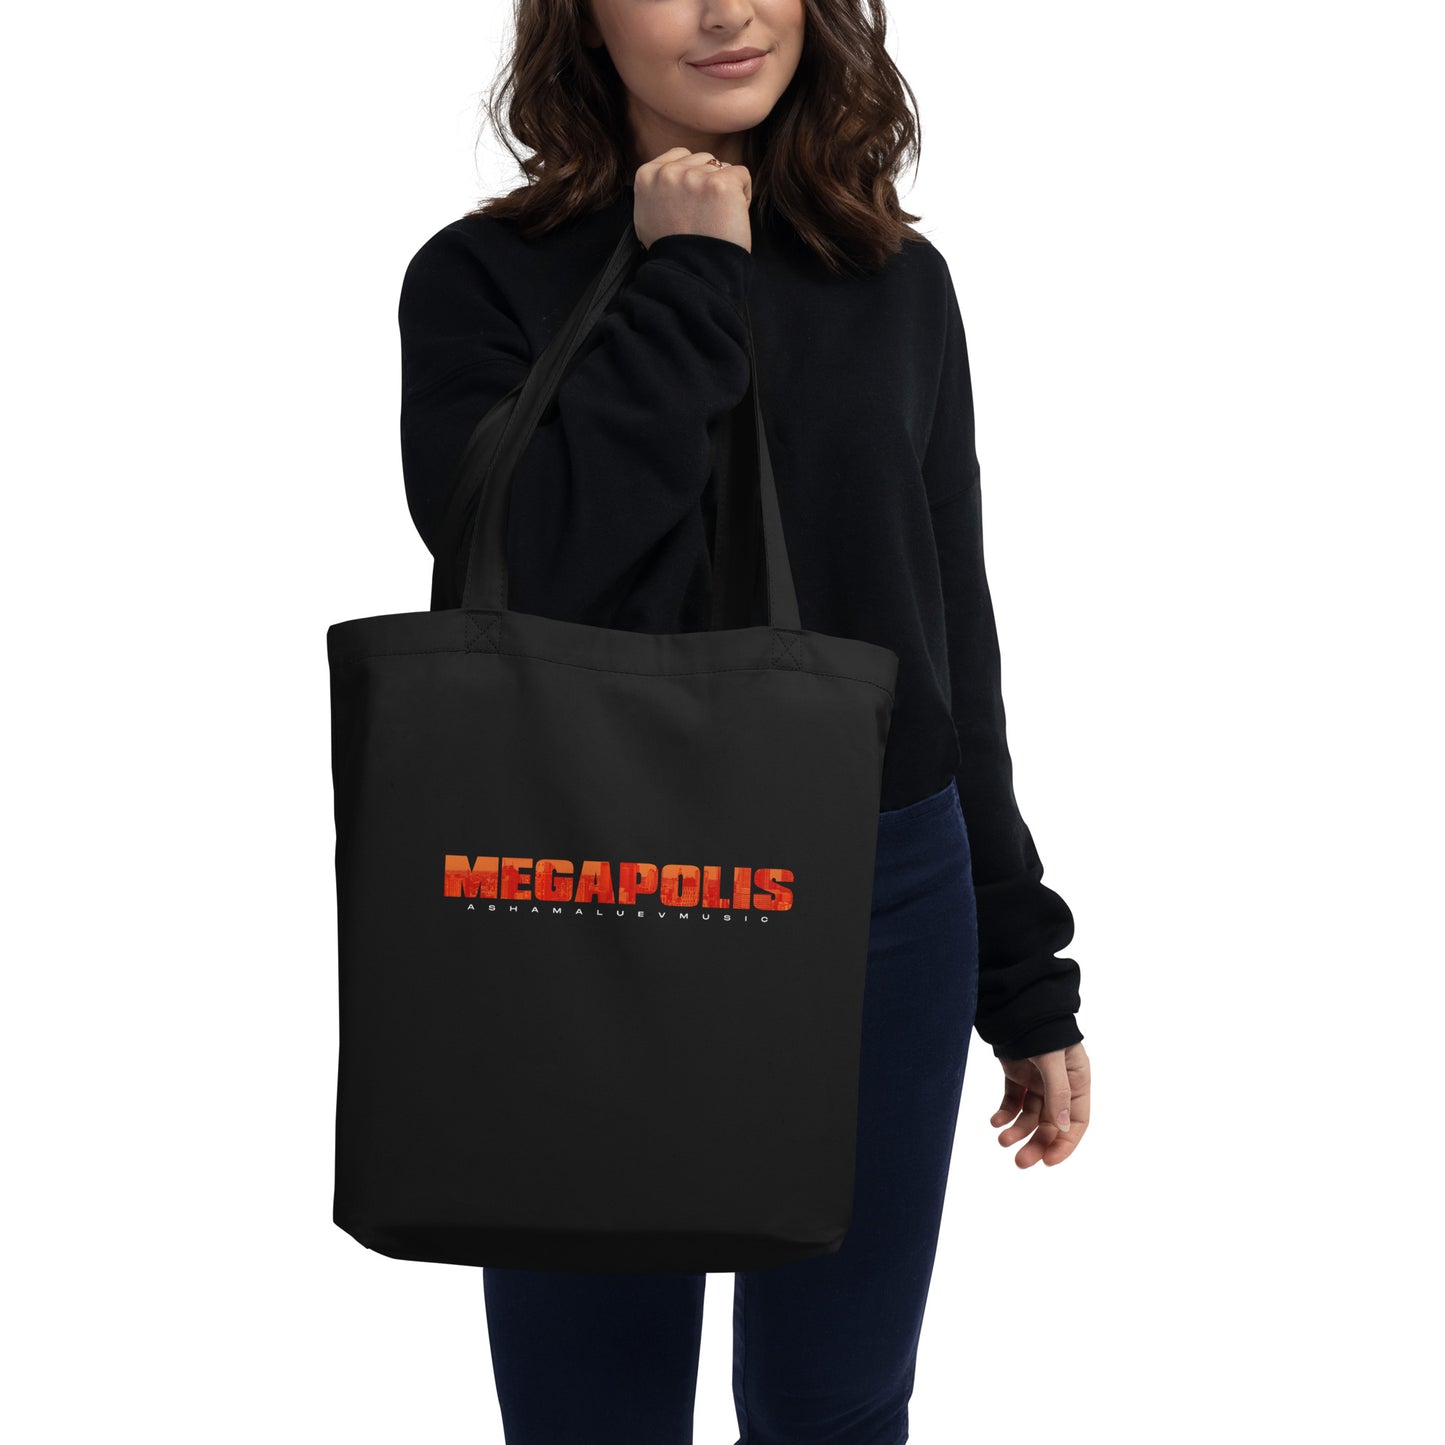 Eco Tote Bag "Megapolis"